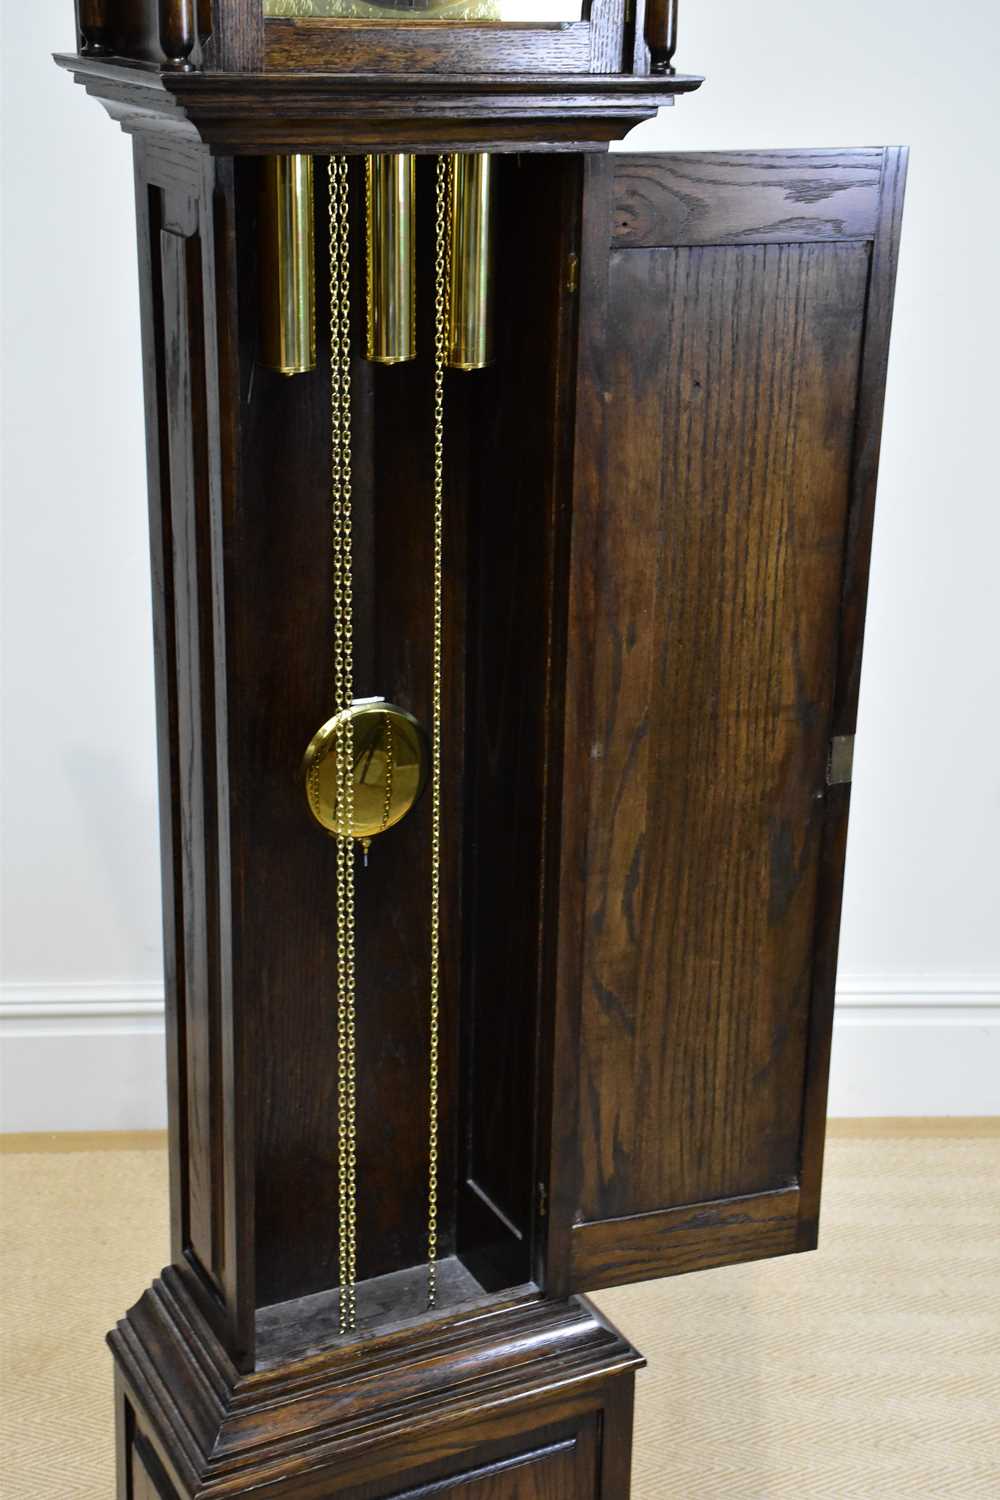 PAUL EDEN, LONGNOR; a reproduction oak longcase clock of small proportions, height 188cm. - Image 3 of 4